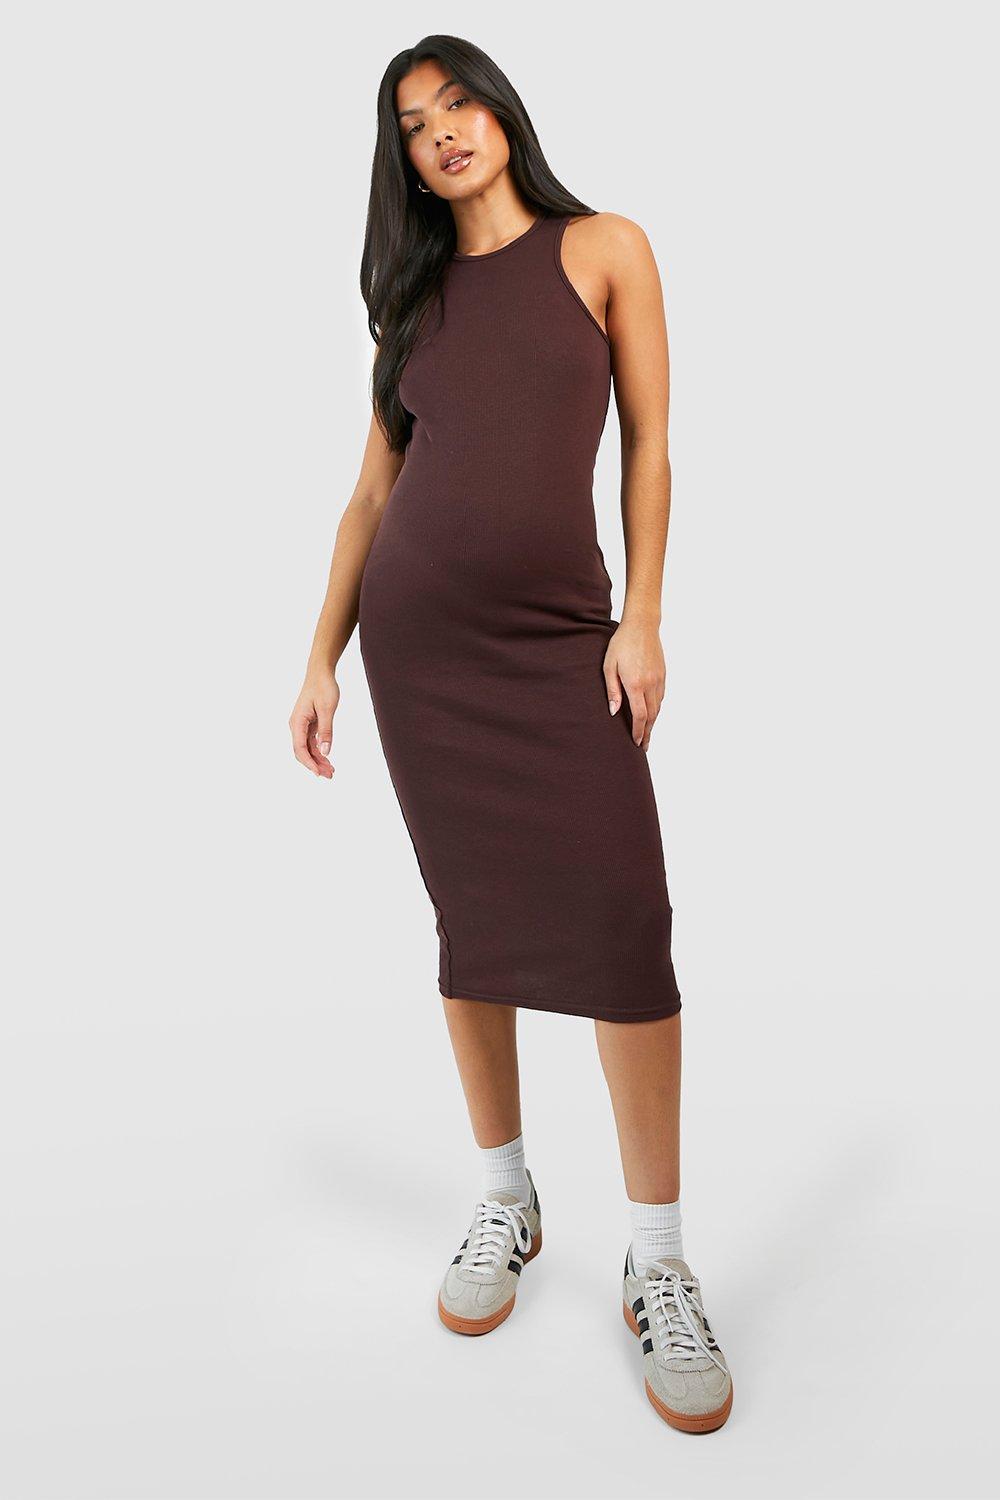 https://cdna.lystit.com/photos/boohoo/665f9012/boohoo-designer-Brown-Maternity-Basic-Racer-Neck-Midi-Dress.jpeg